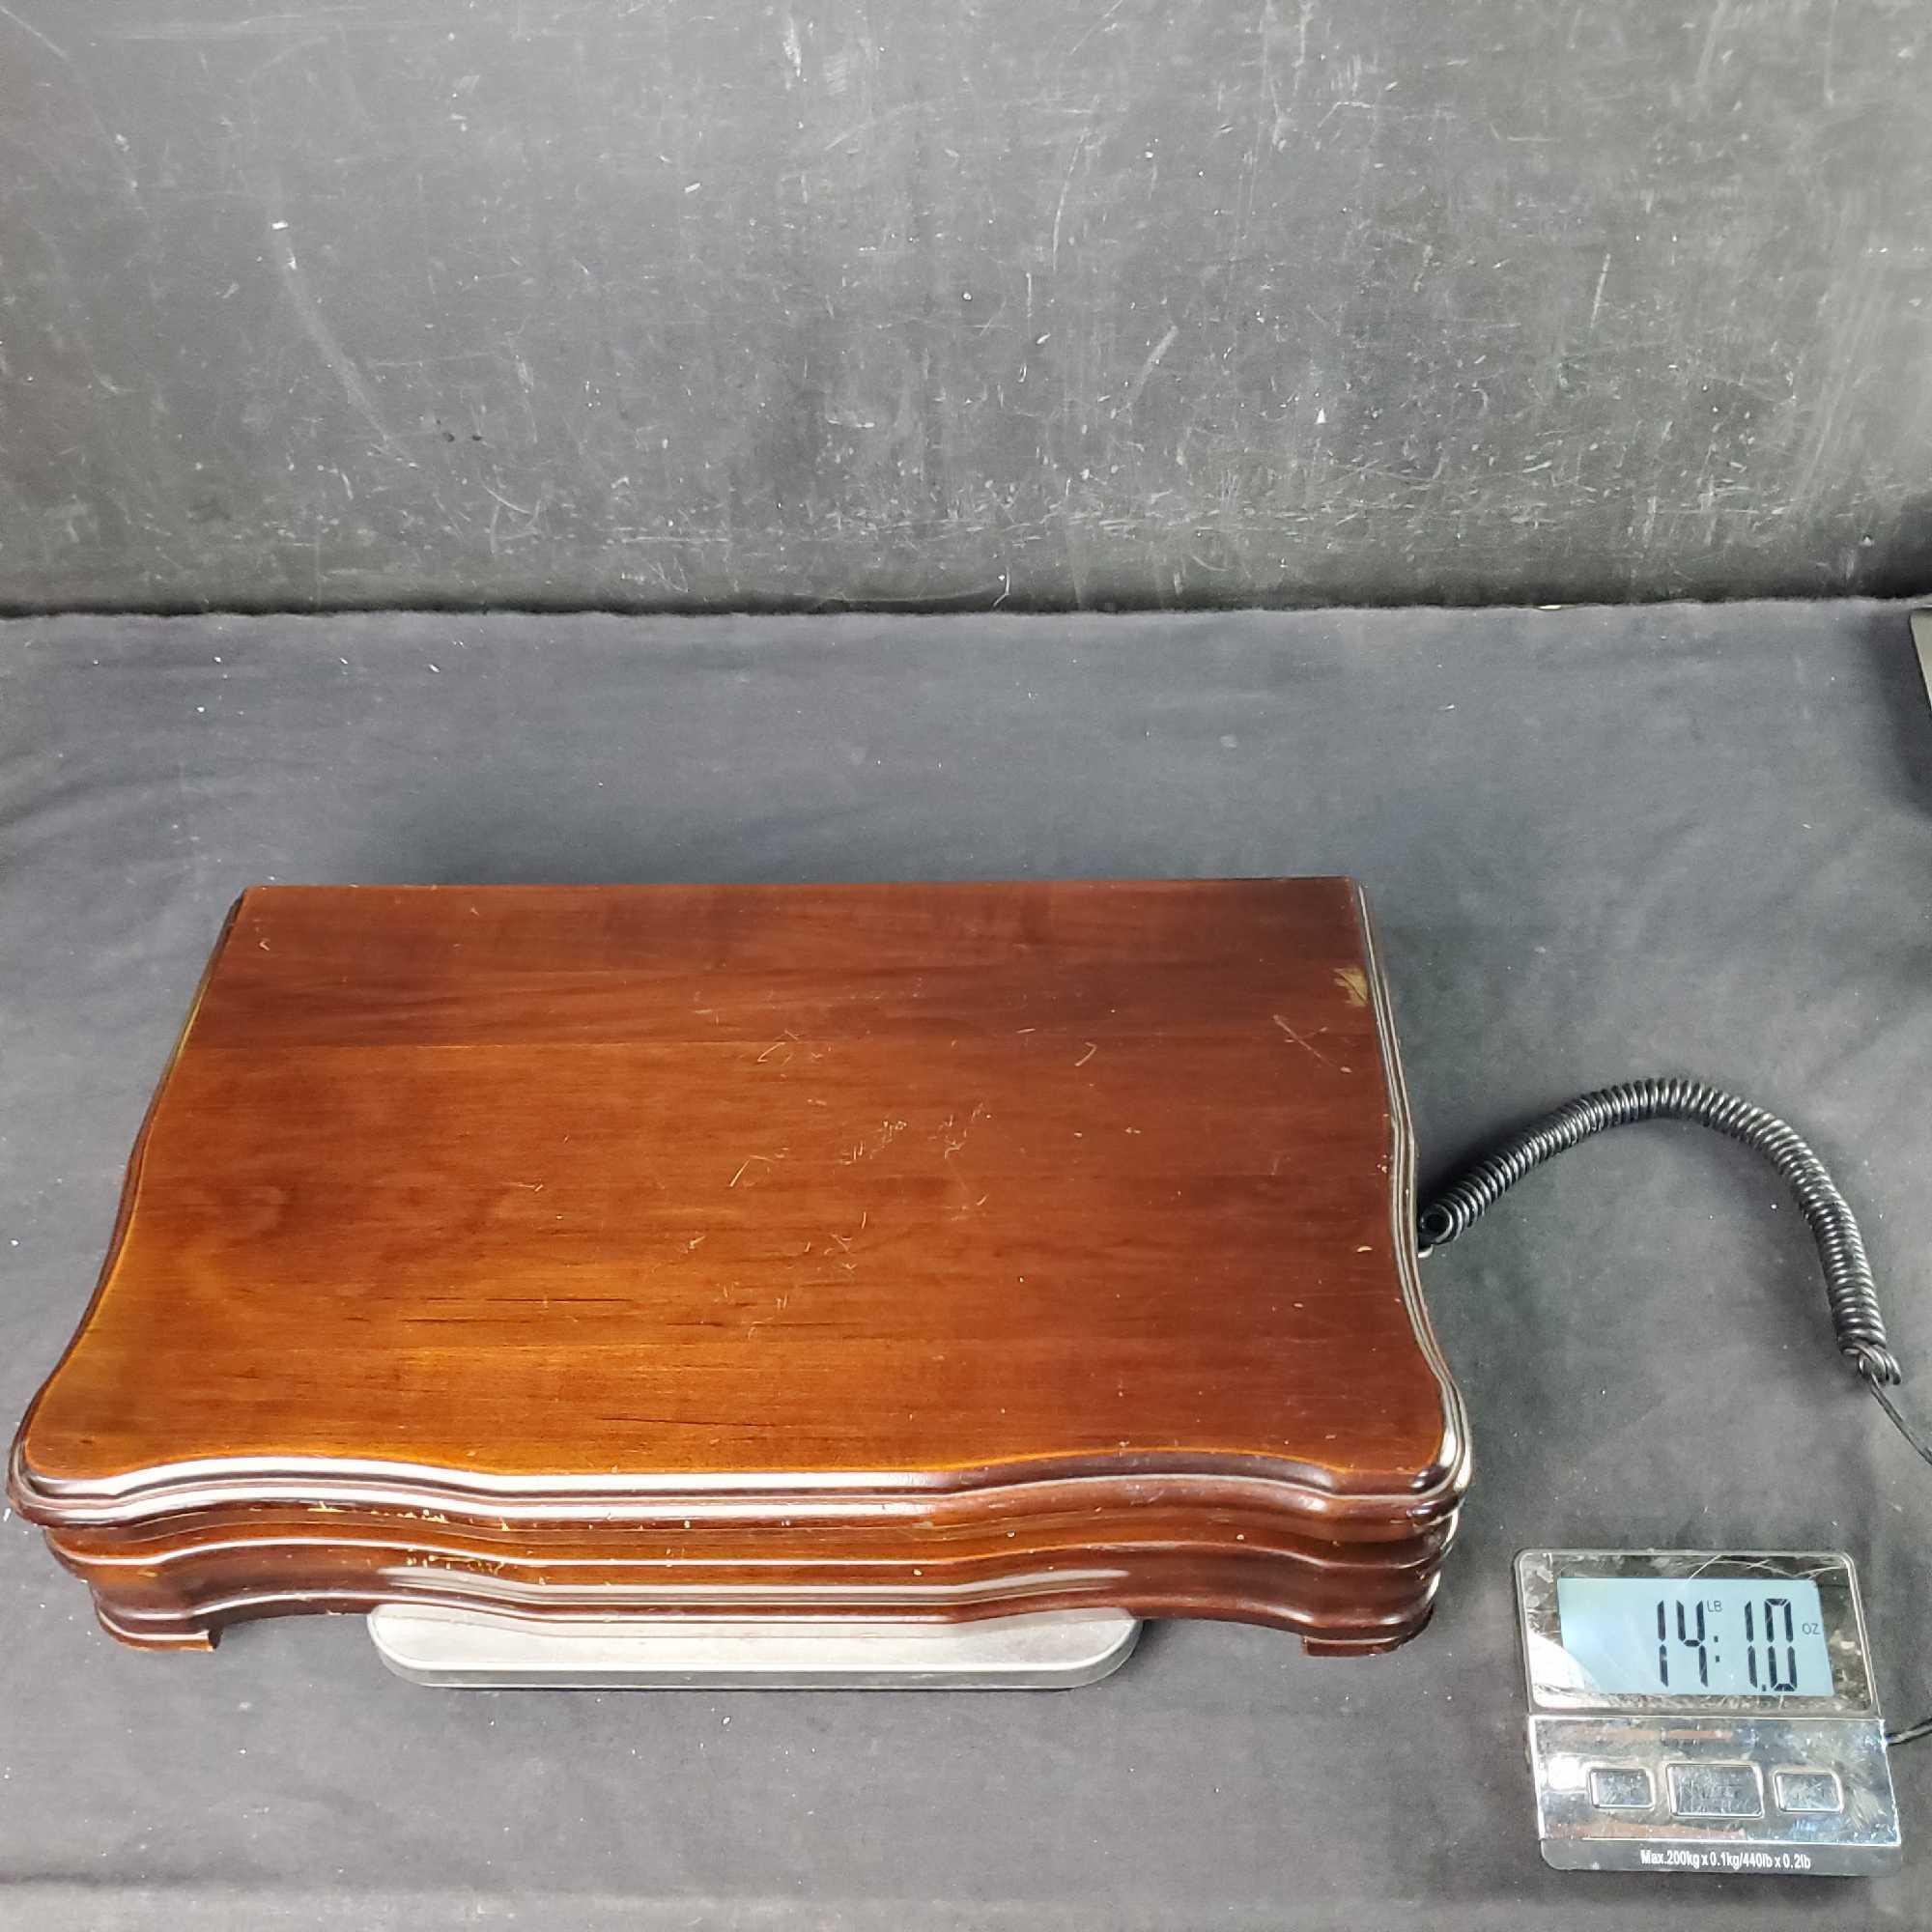 wooden silverware case with Community Silverplate flatware